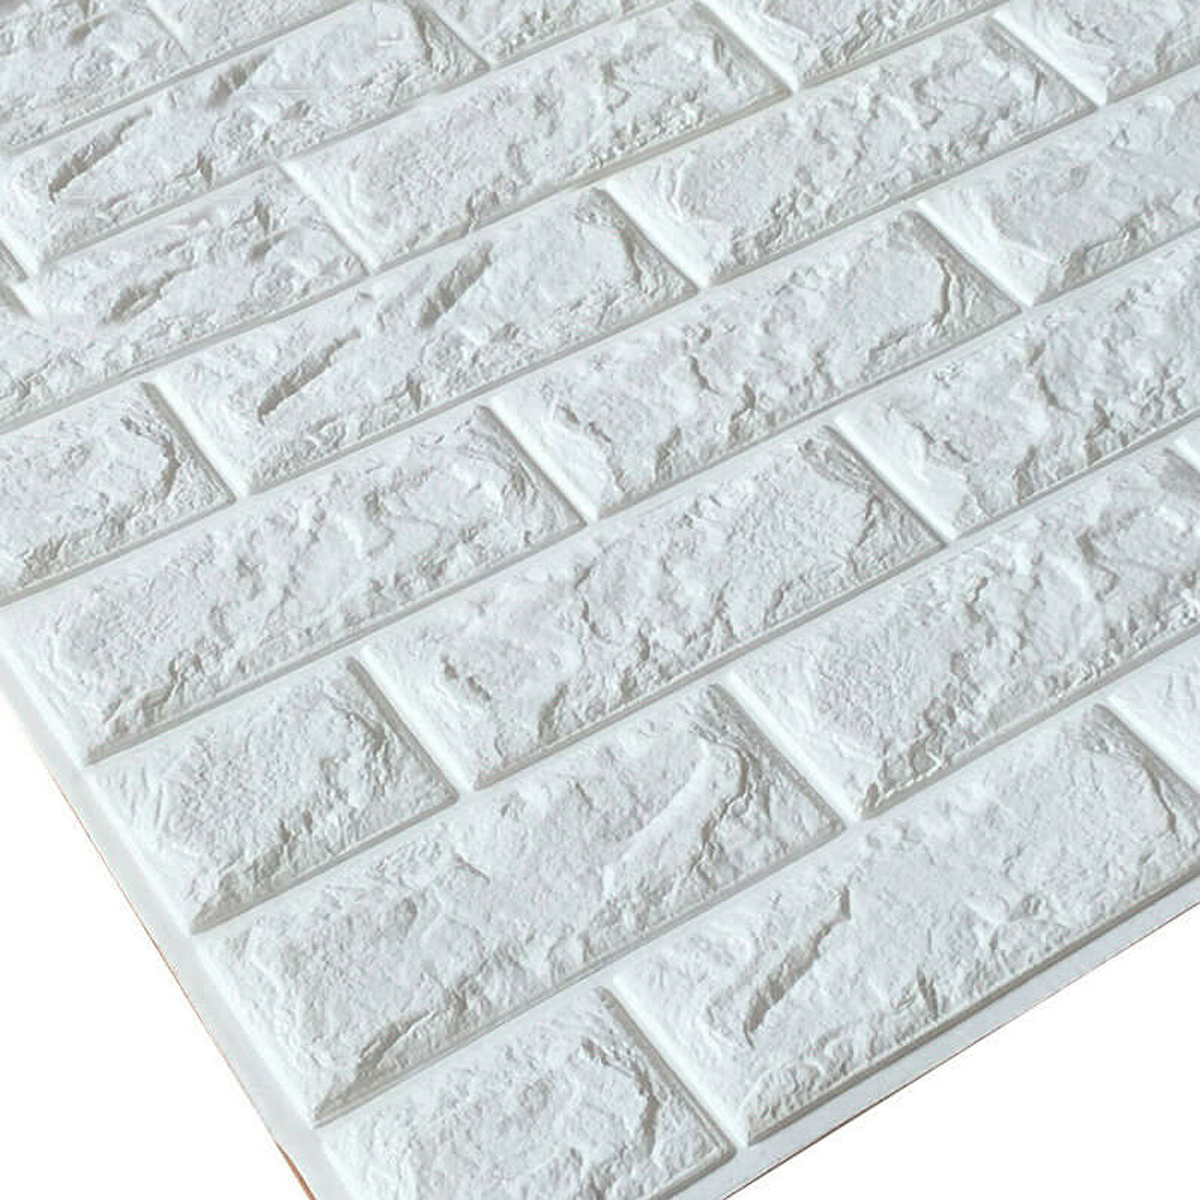 3D-Brick-DIY-Wall-Sticker-Self-adhesive-Waterproof-Panels-Wallpaper-Decal-3D-Brick-Pattern-Foam-Wall-1807833-4